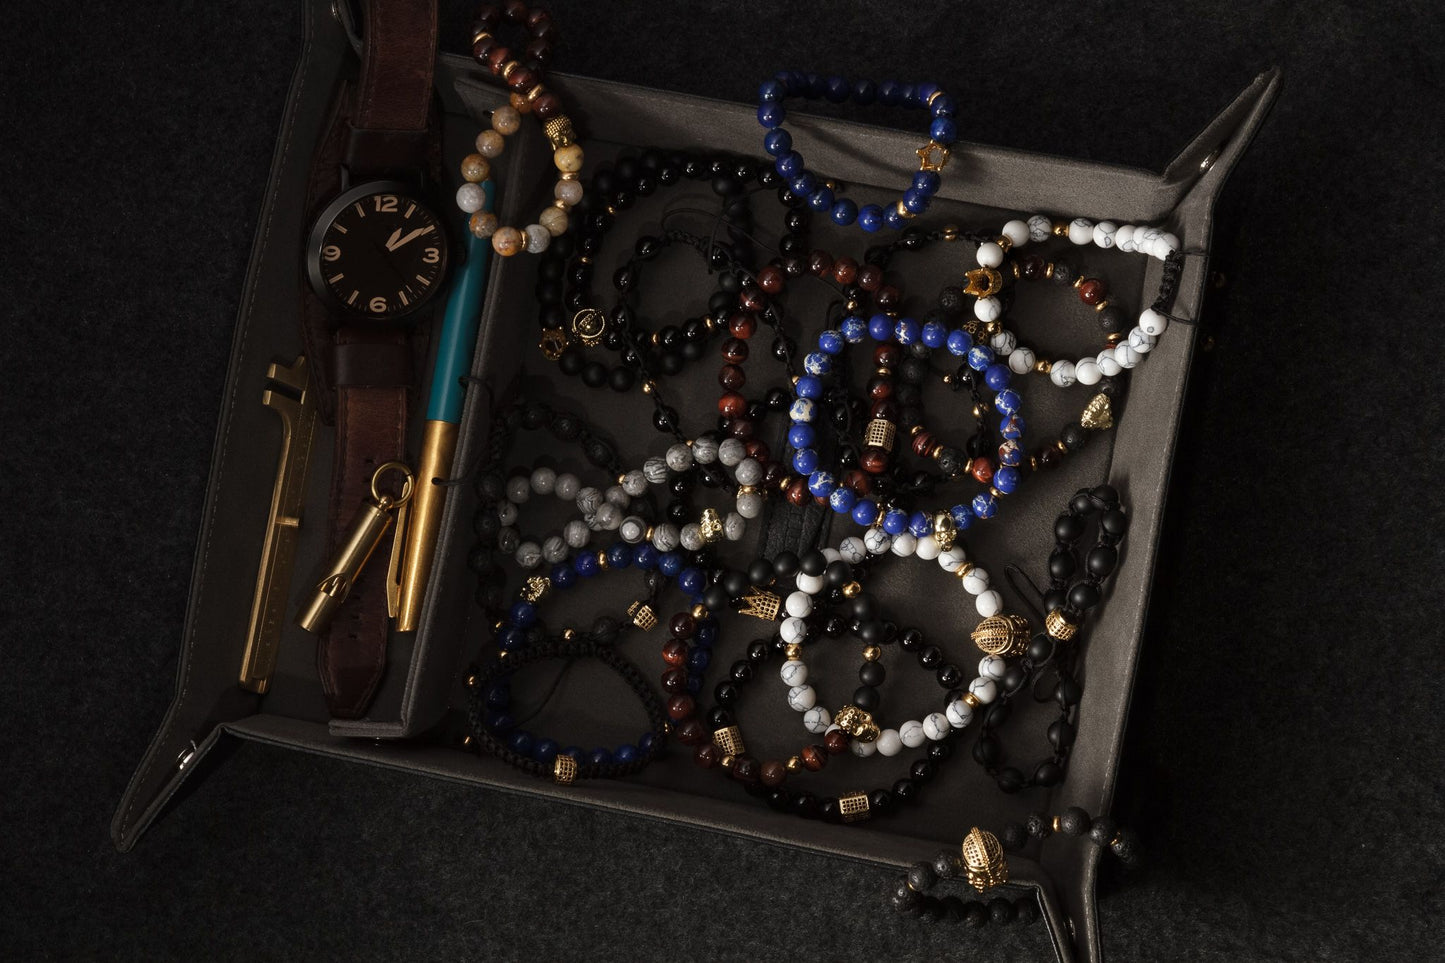 UNCOMMON Men's Beads Bracelet One Gold Jeweled Warrior Charm Black Lava Beads